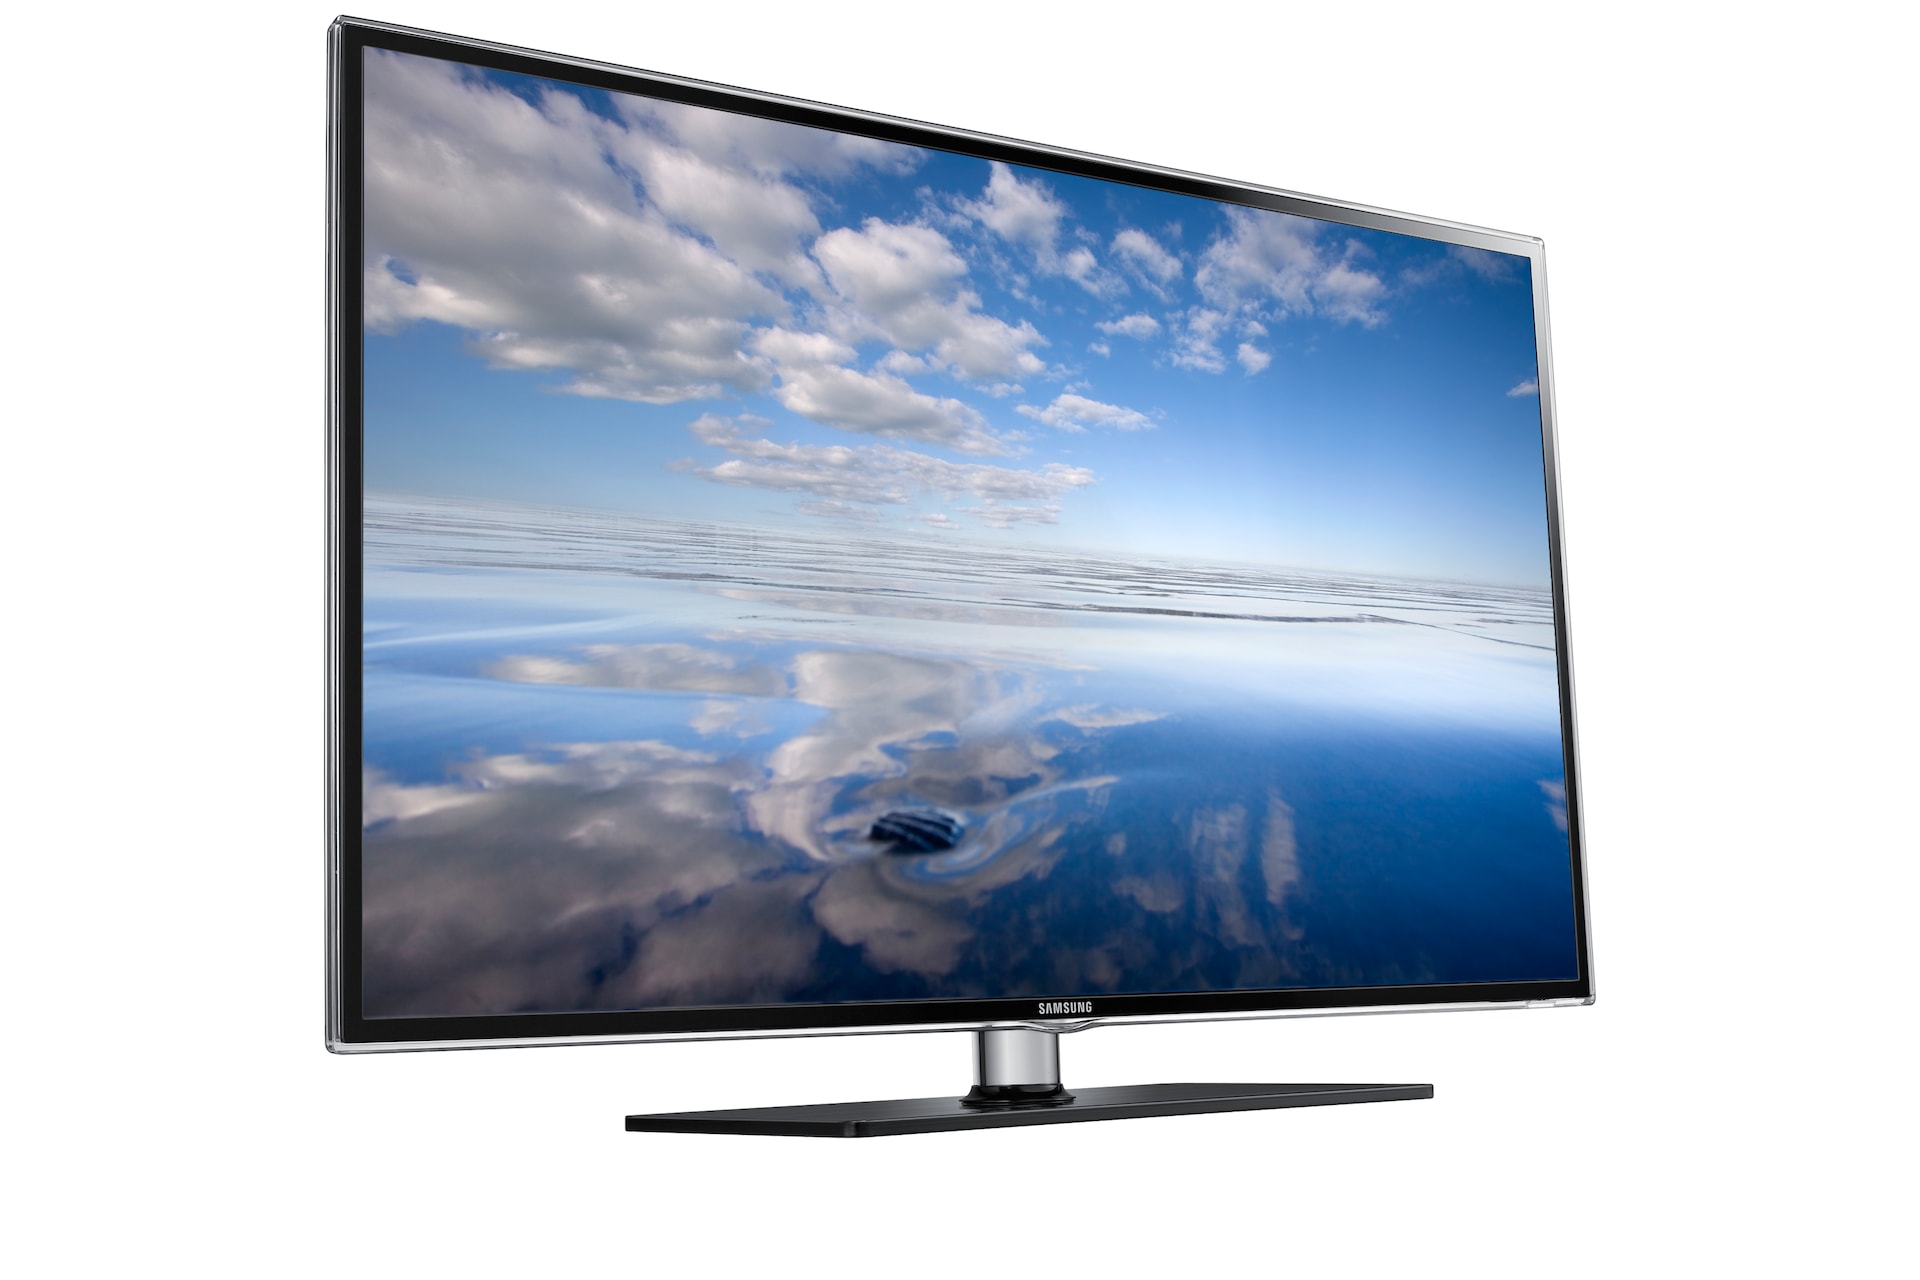 55 6900 Series smart 3D full HD 1080p LED TV | SAMSUNG Canada3000 x 2000